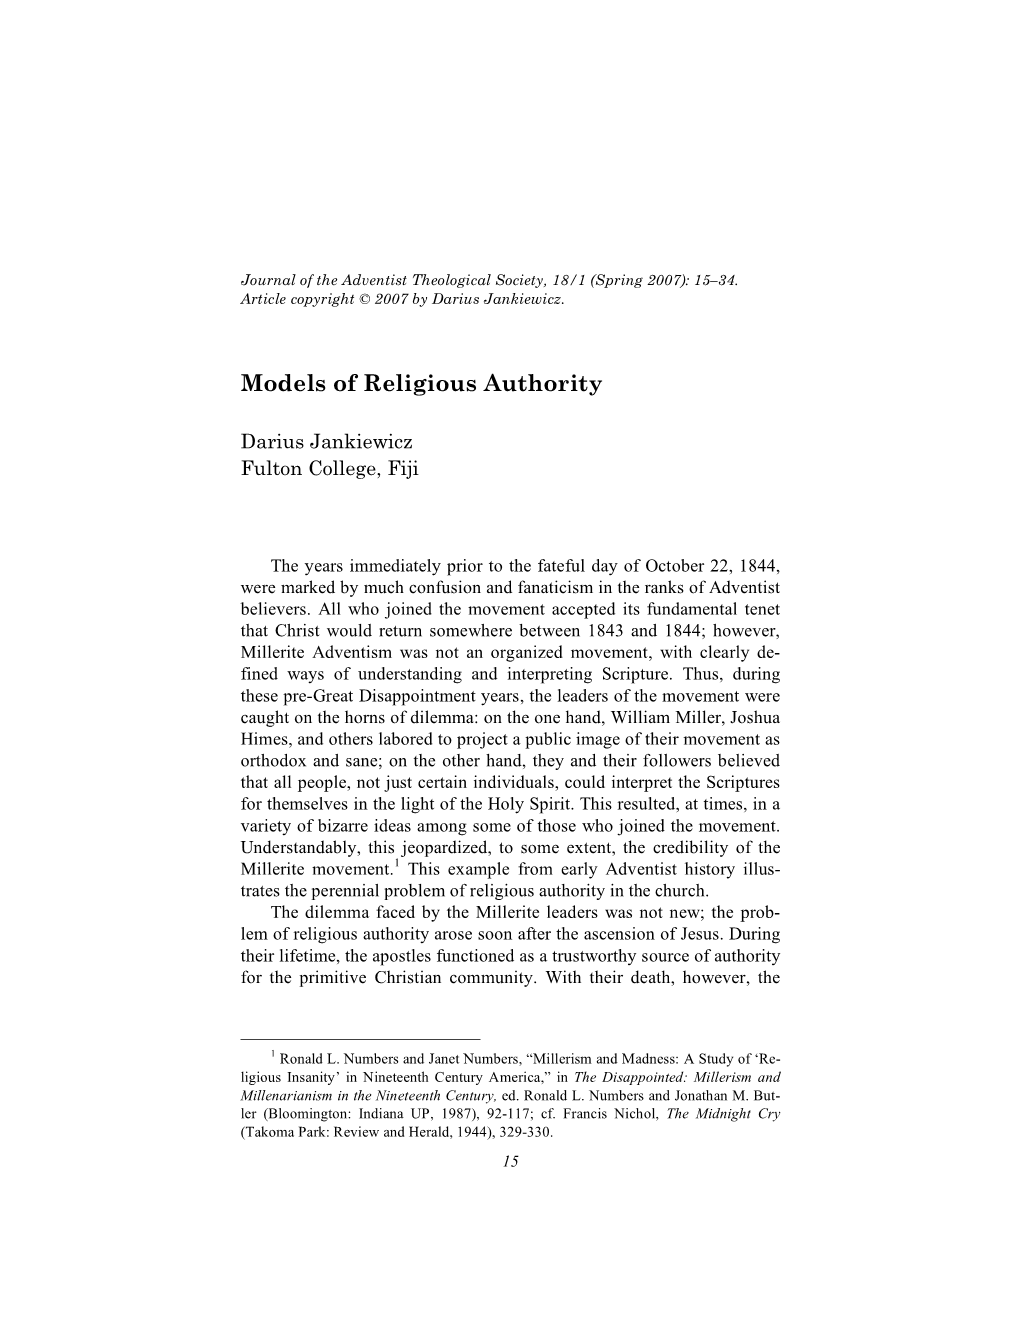 Models of Religious Authority